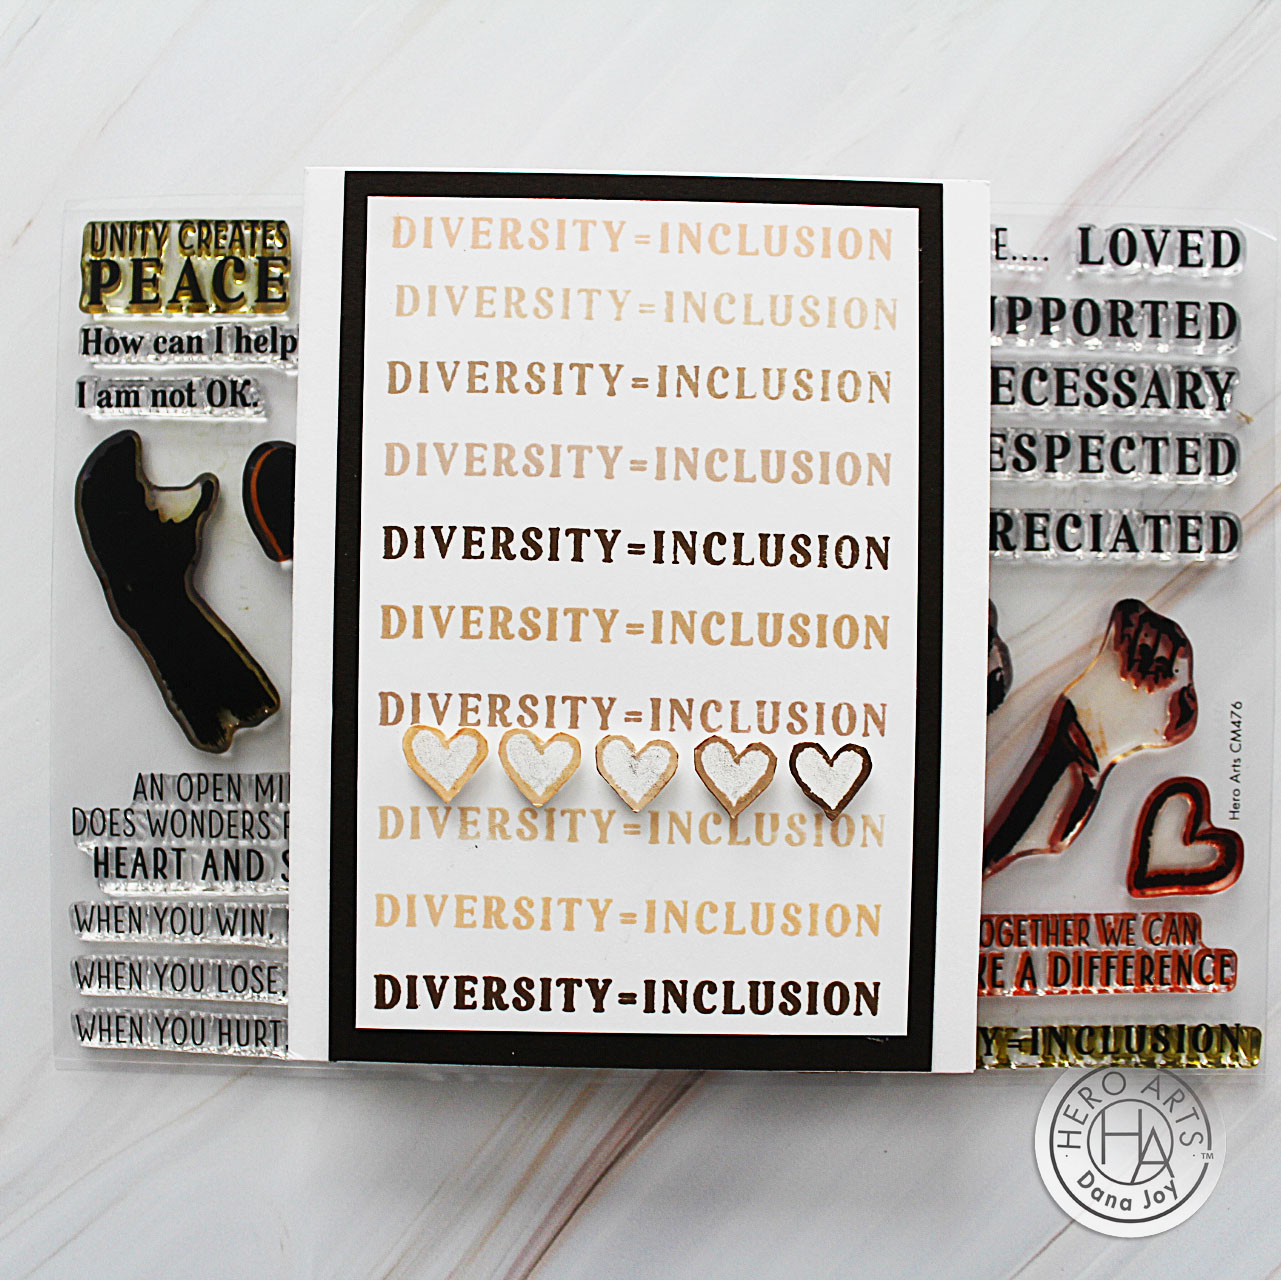 Diversity=inclusion